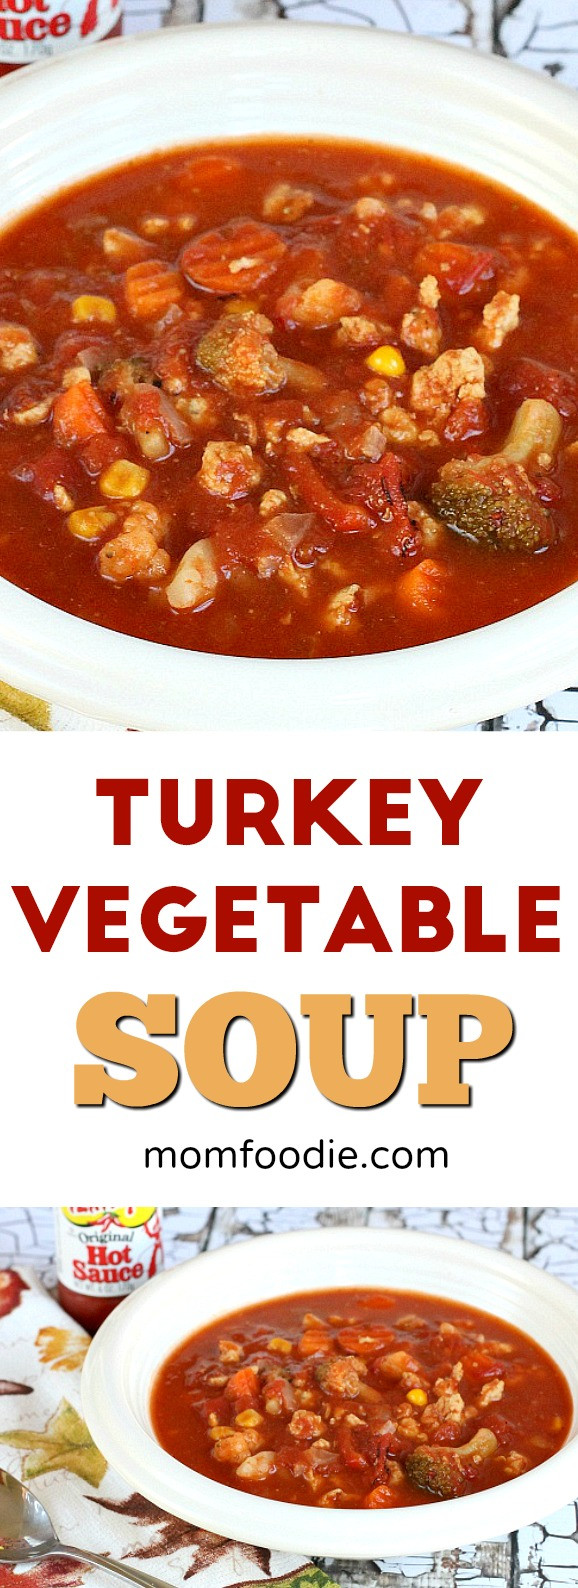 Low Calorie Ground Turkey Recipes
 Turkey Ve able Soup Recipe an easy low calorie soup